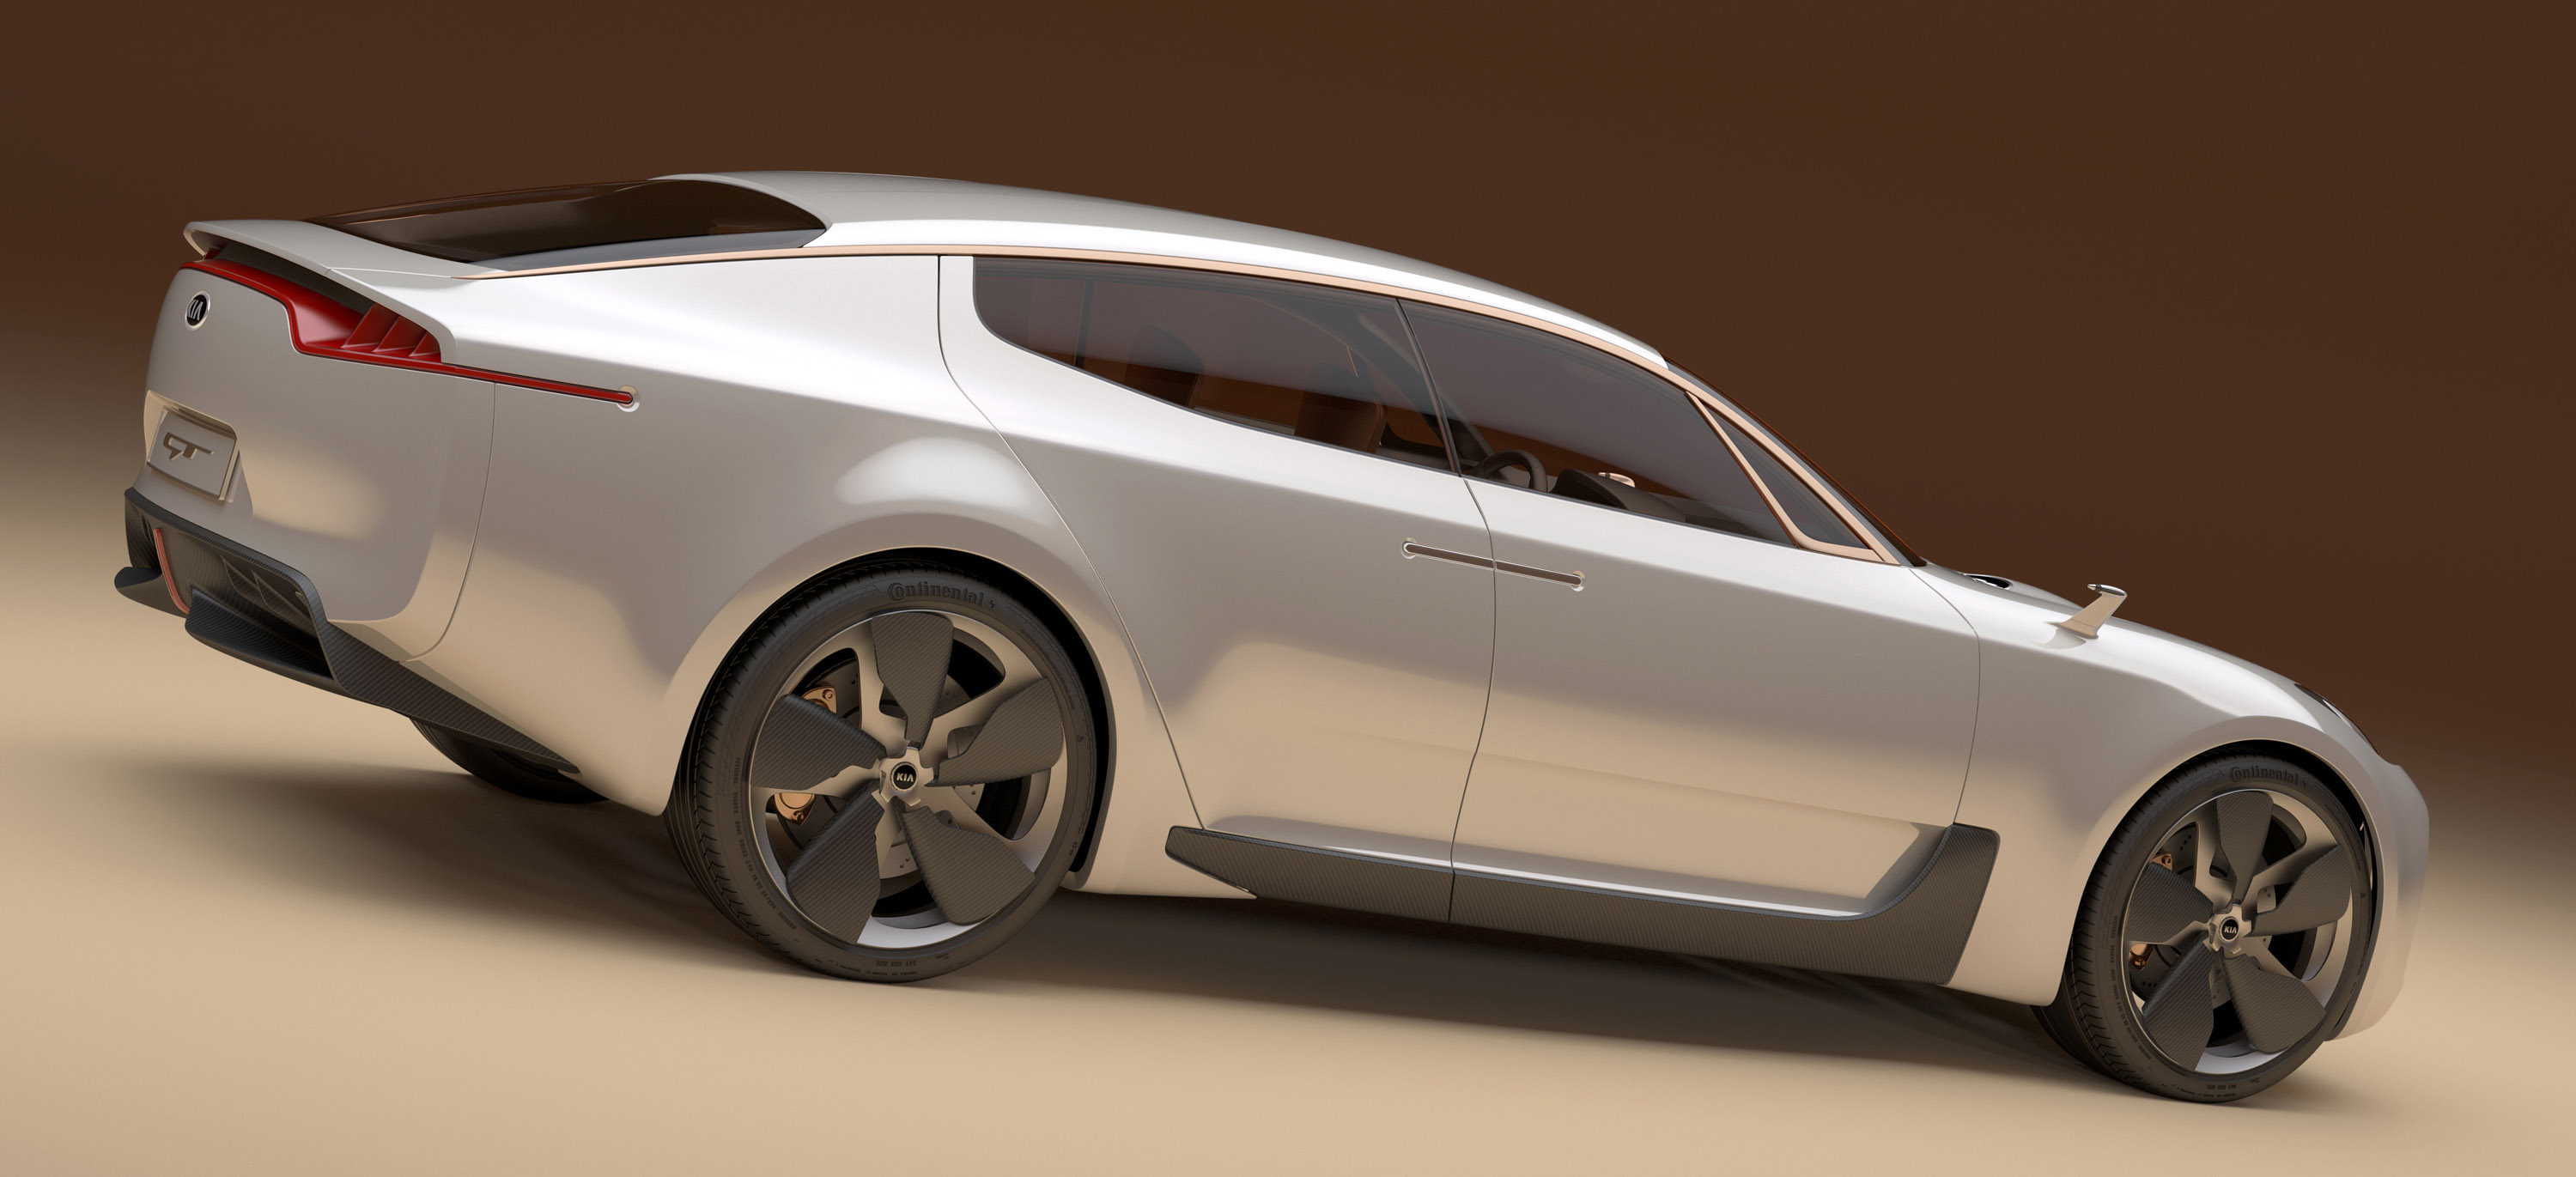 KIA Four-door Sports Sedan Concept